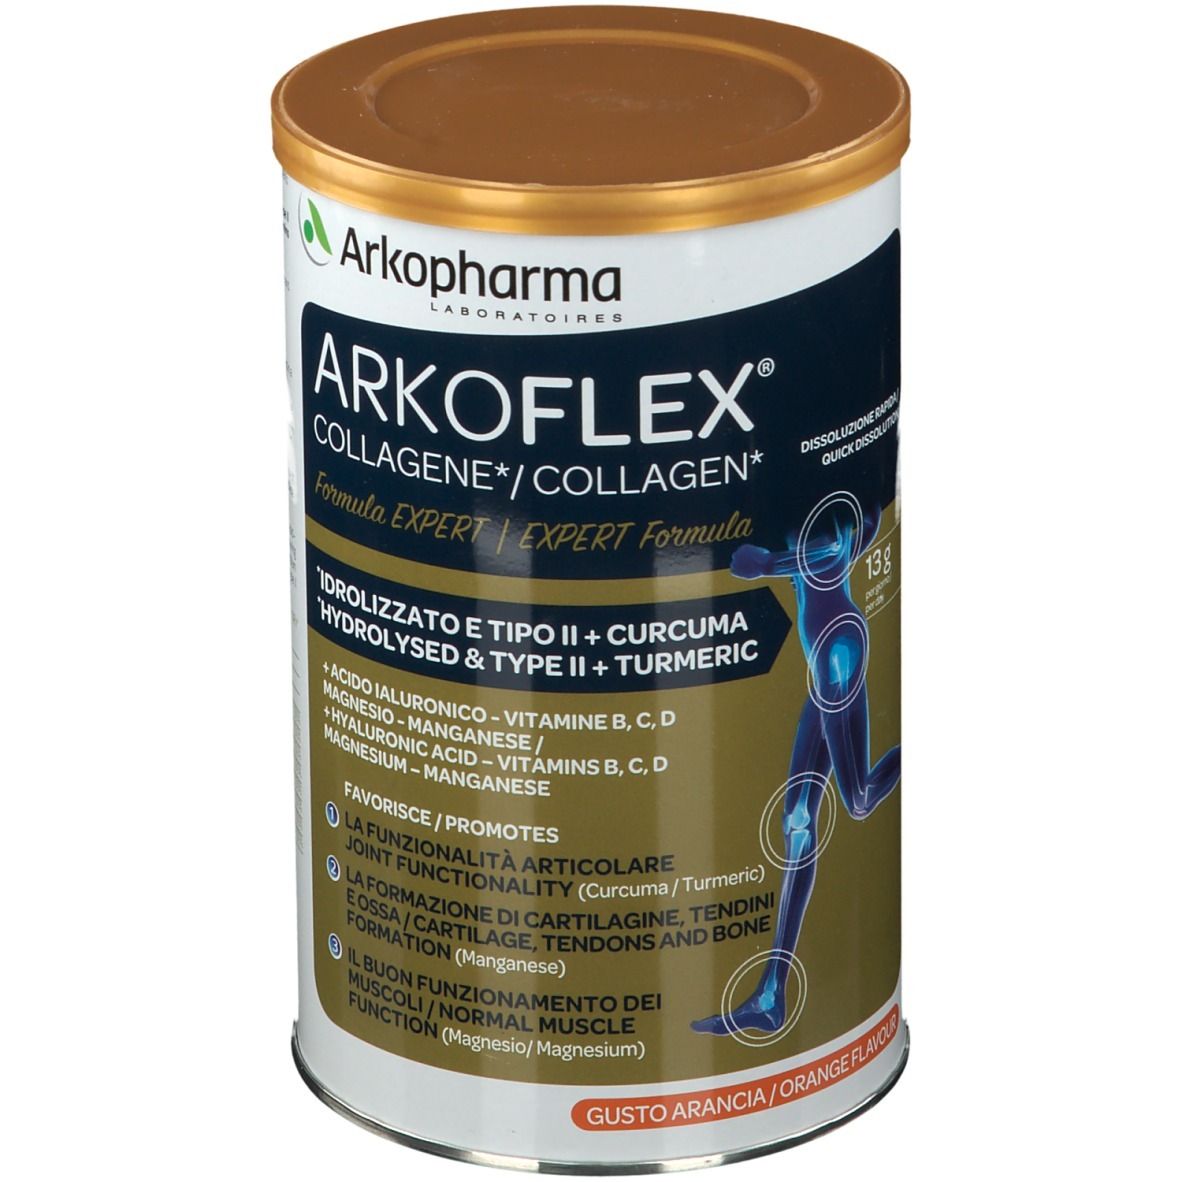 Arkopharma Arkoflex® Collagene